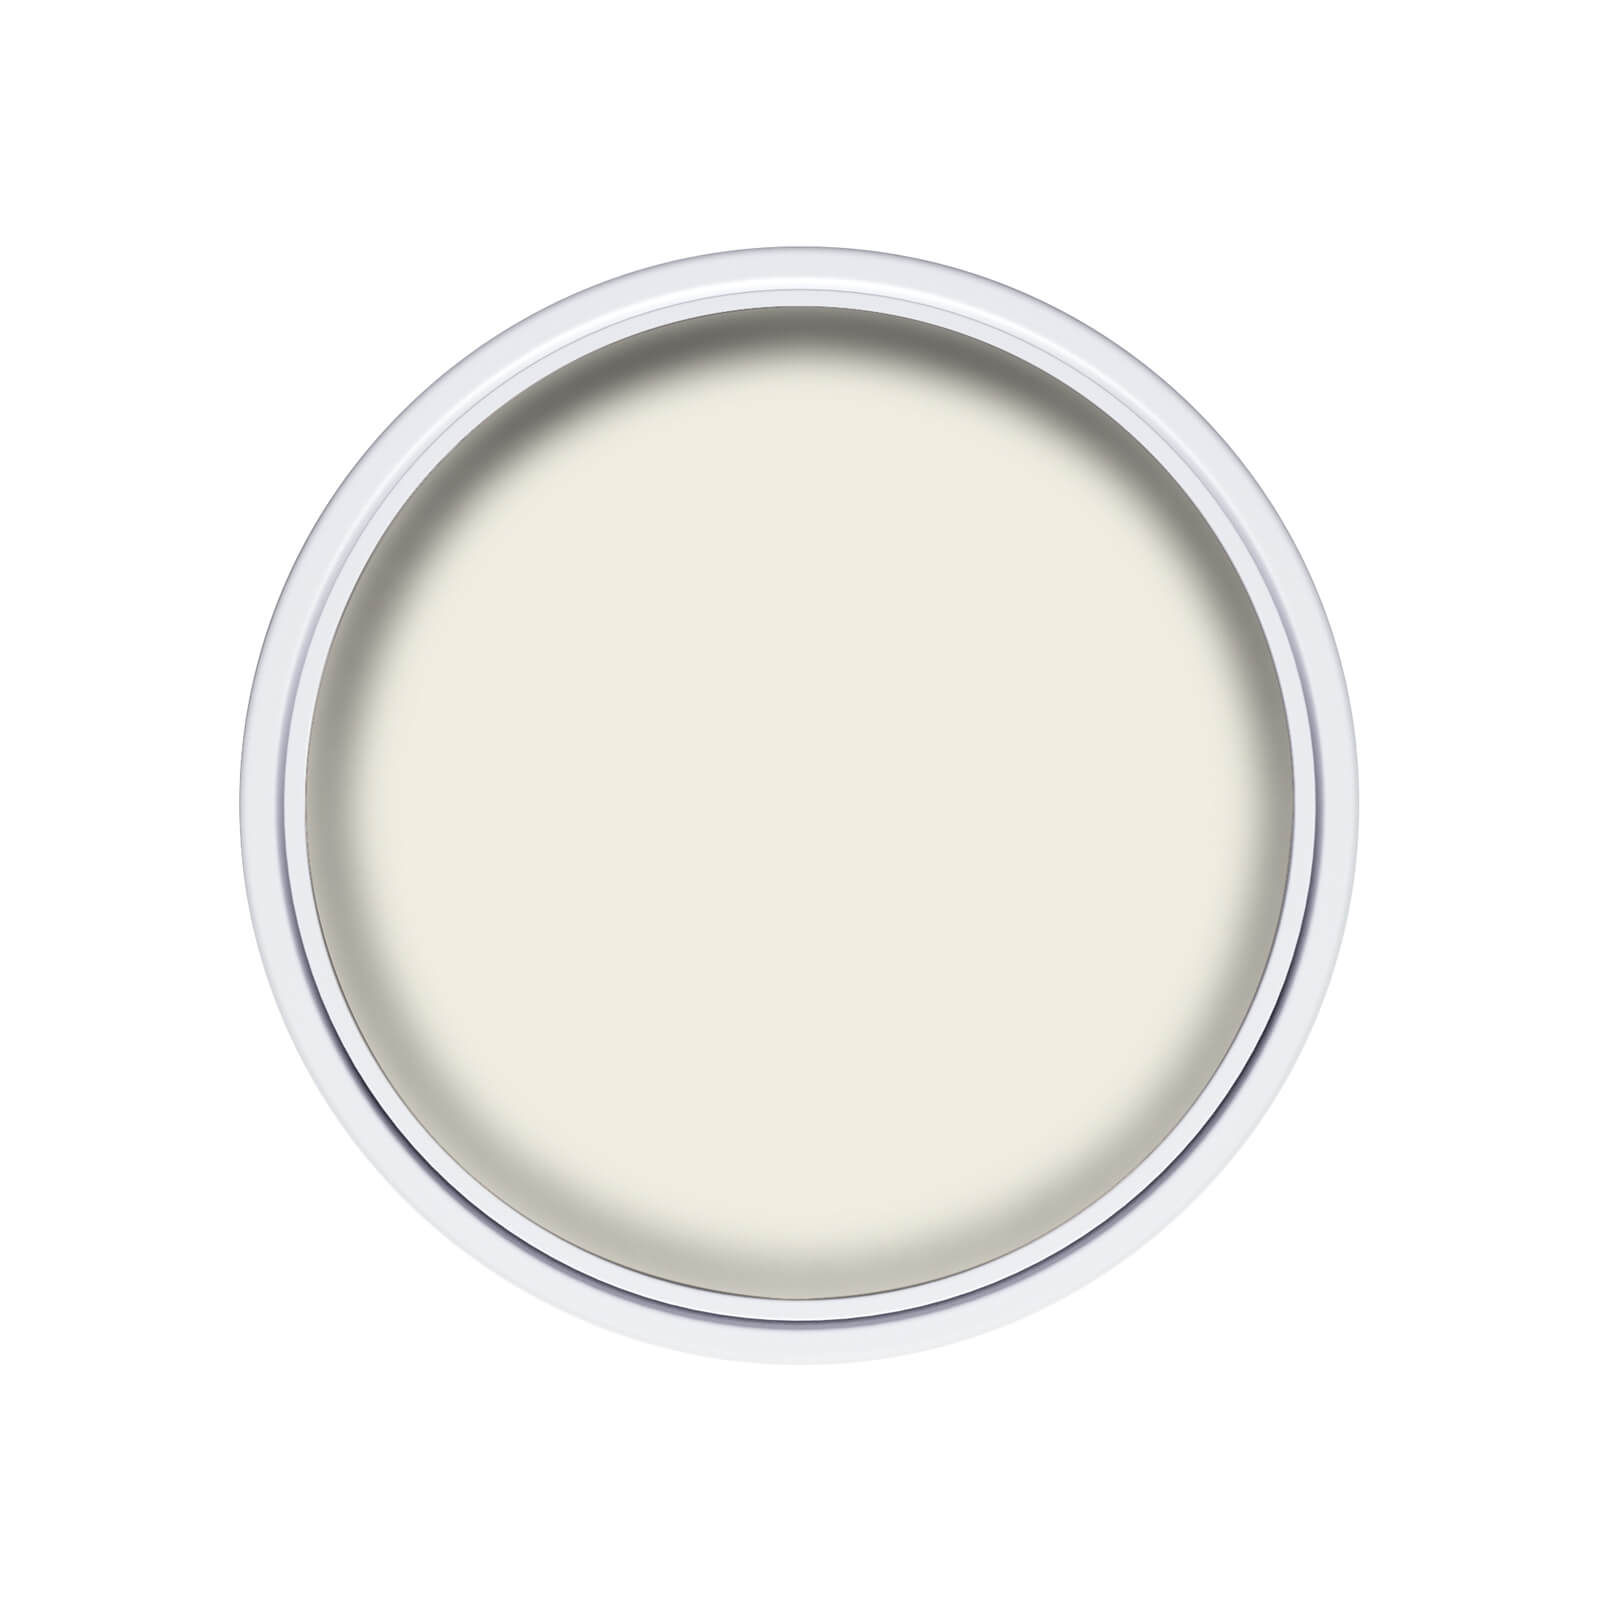 Dulux Weathershield Quick Dry Satin Paint Almond White - 750ml